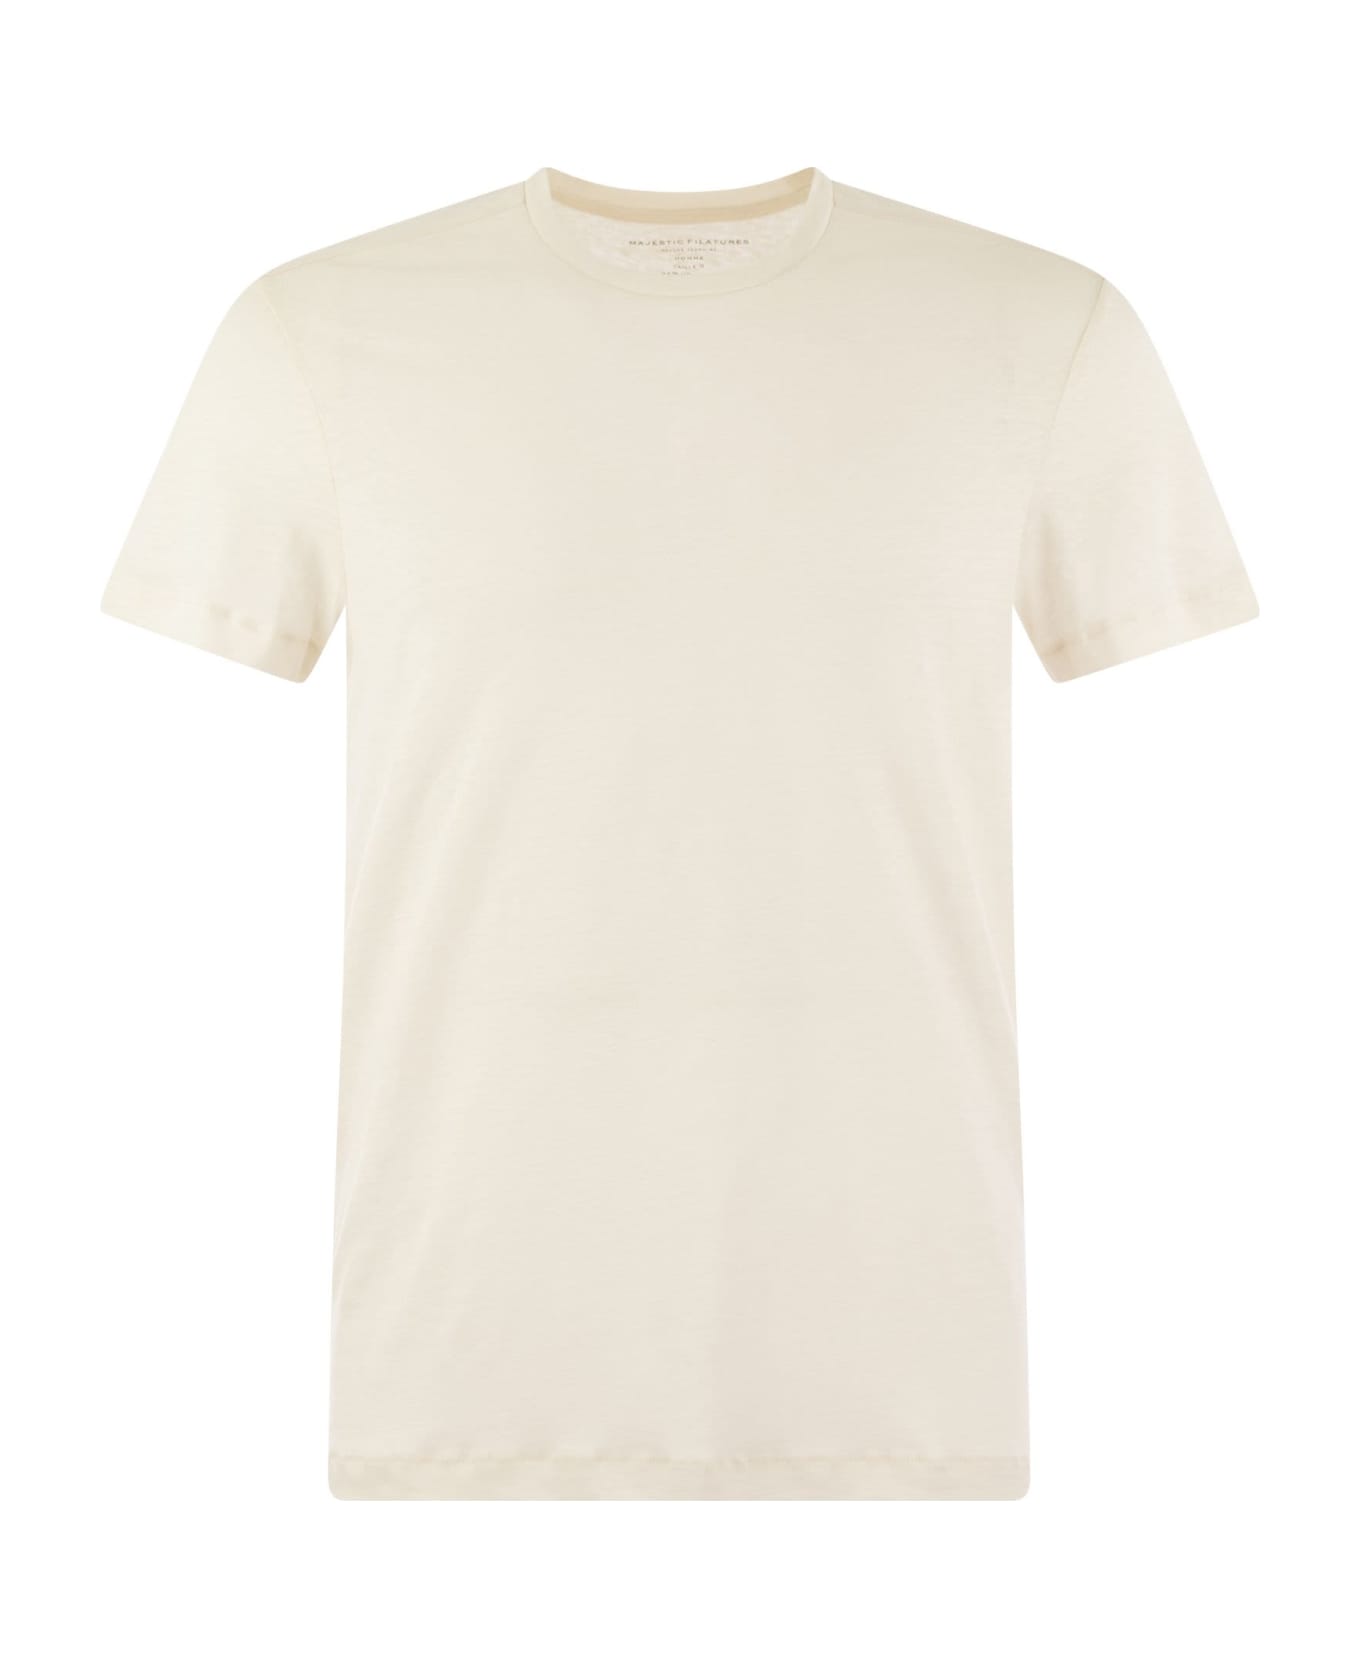 Majestic Filatures Linen Crew-neck T-shirt - Cream シャツ